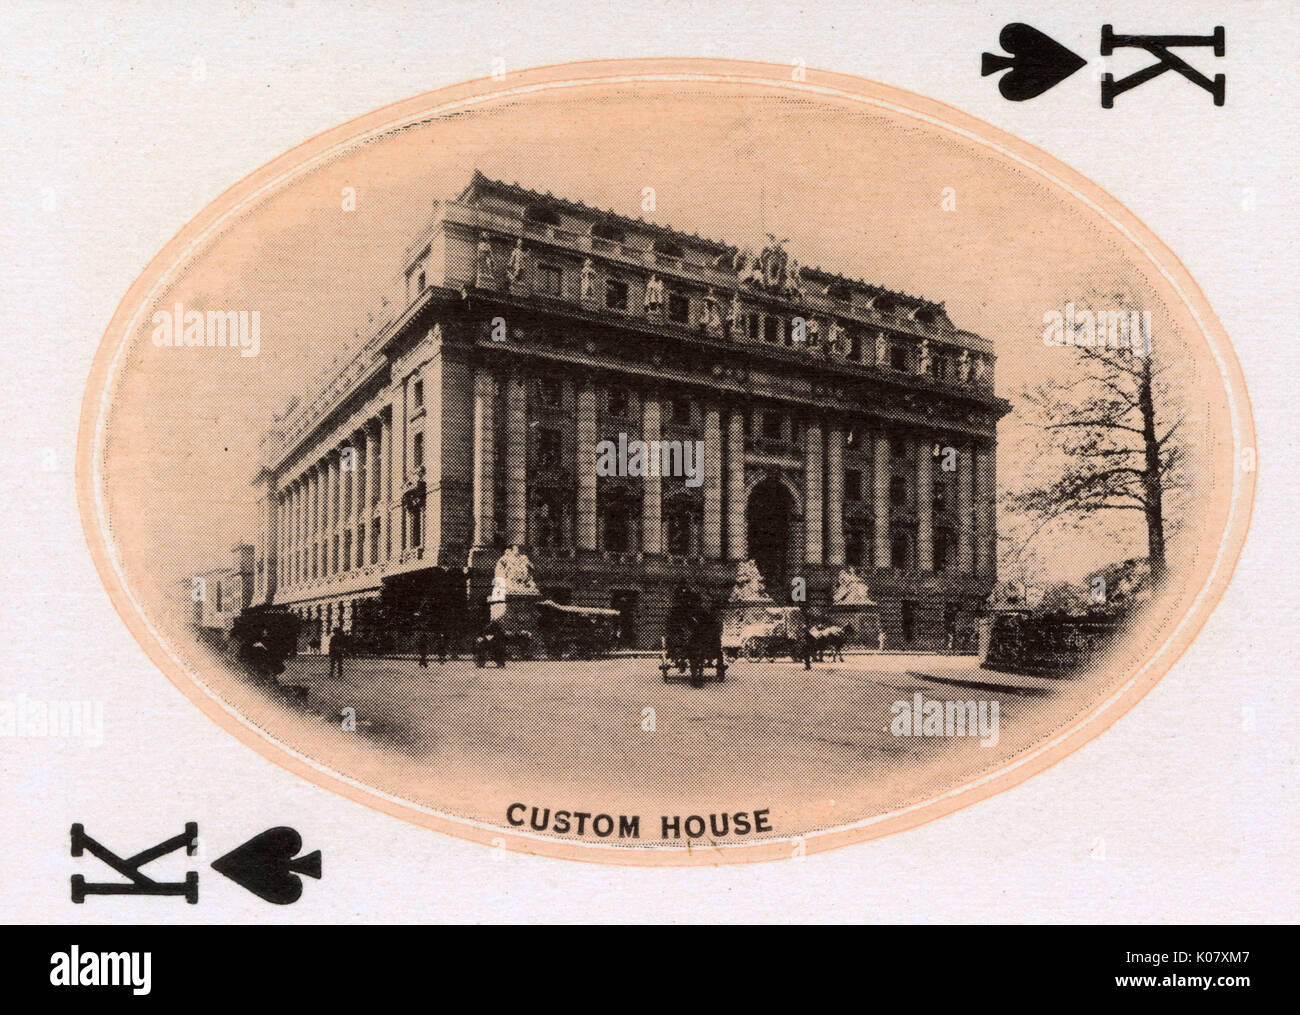 New York City - Playing card - Custom House - King of Spades Stock Photo